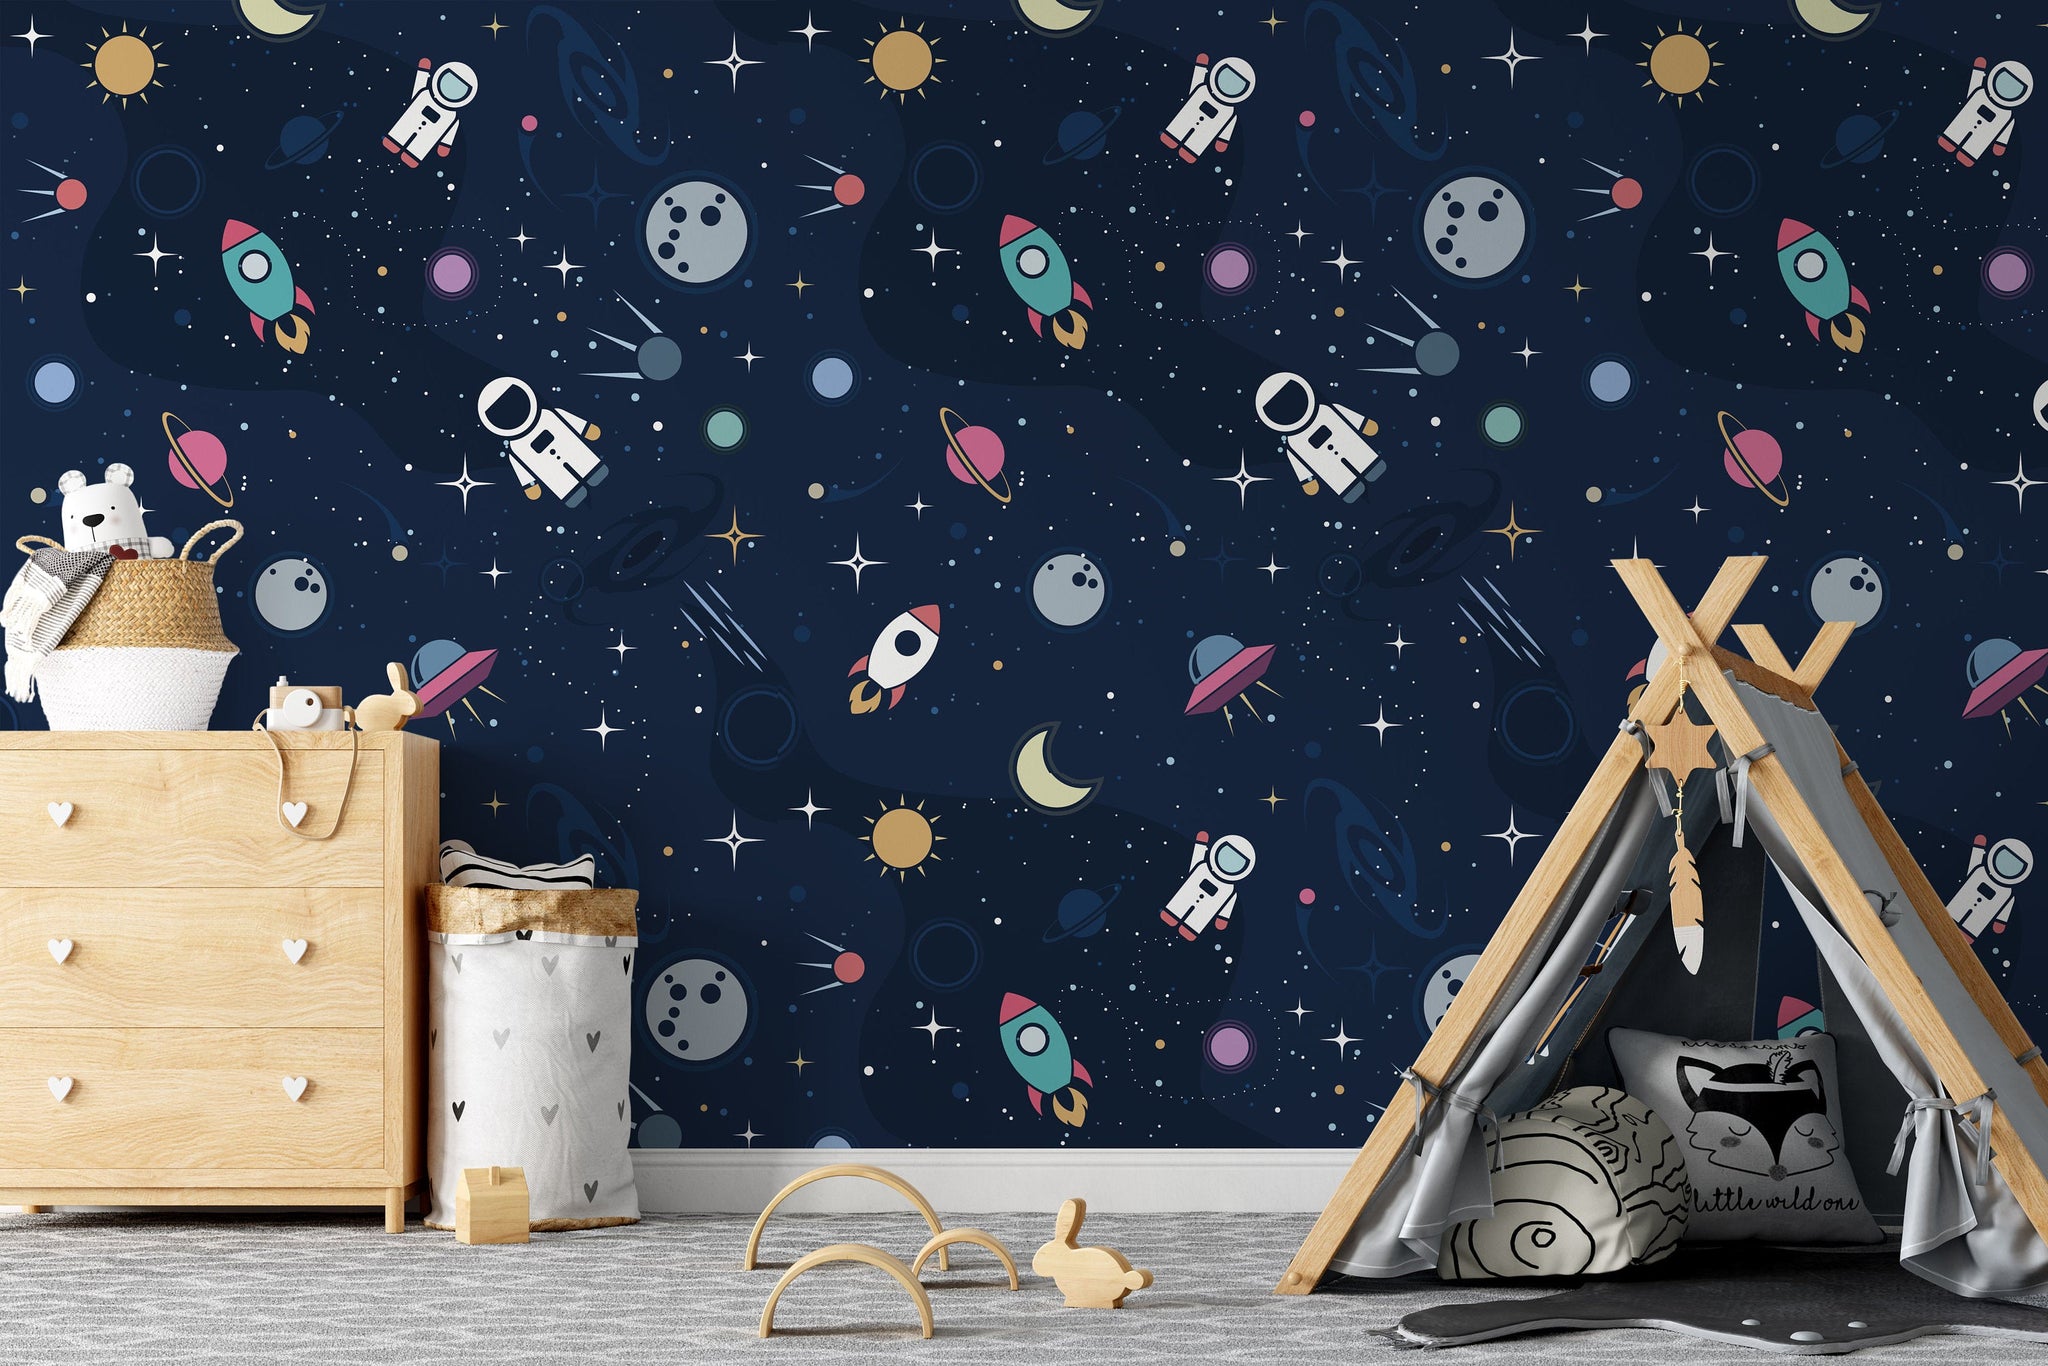 Astronaut Spaceship Rocket Moon Black Hole Funny Wallpaper Bedroom